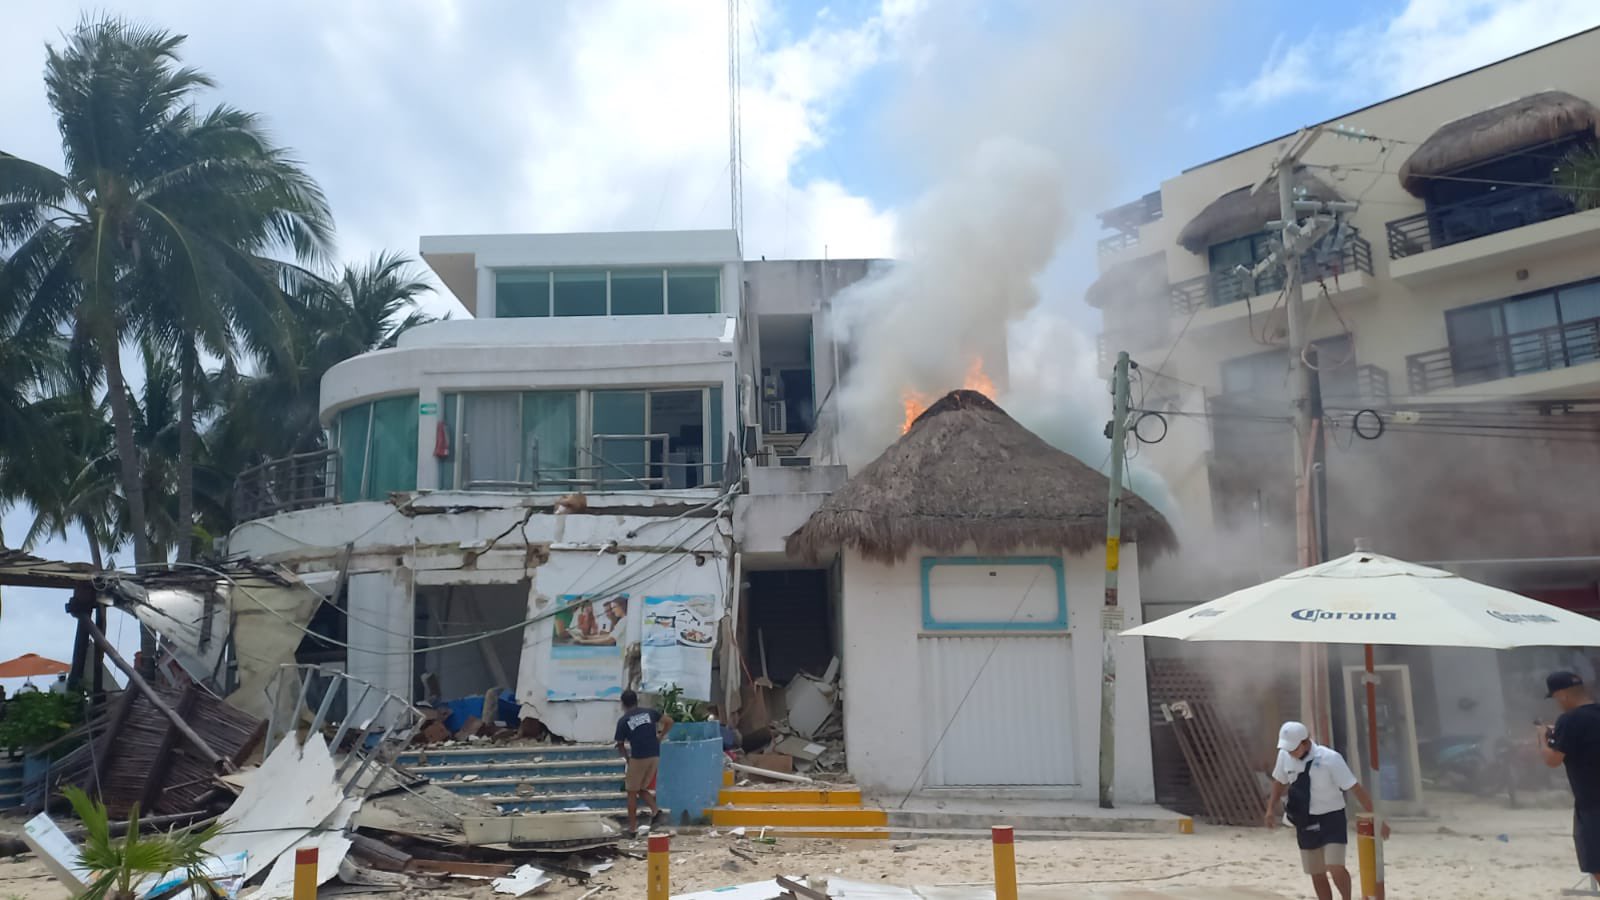 Restaurant explodes in Playa del Carmen, leaves 19 injured and 2 dead